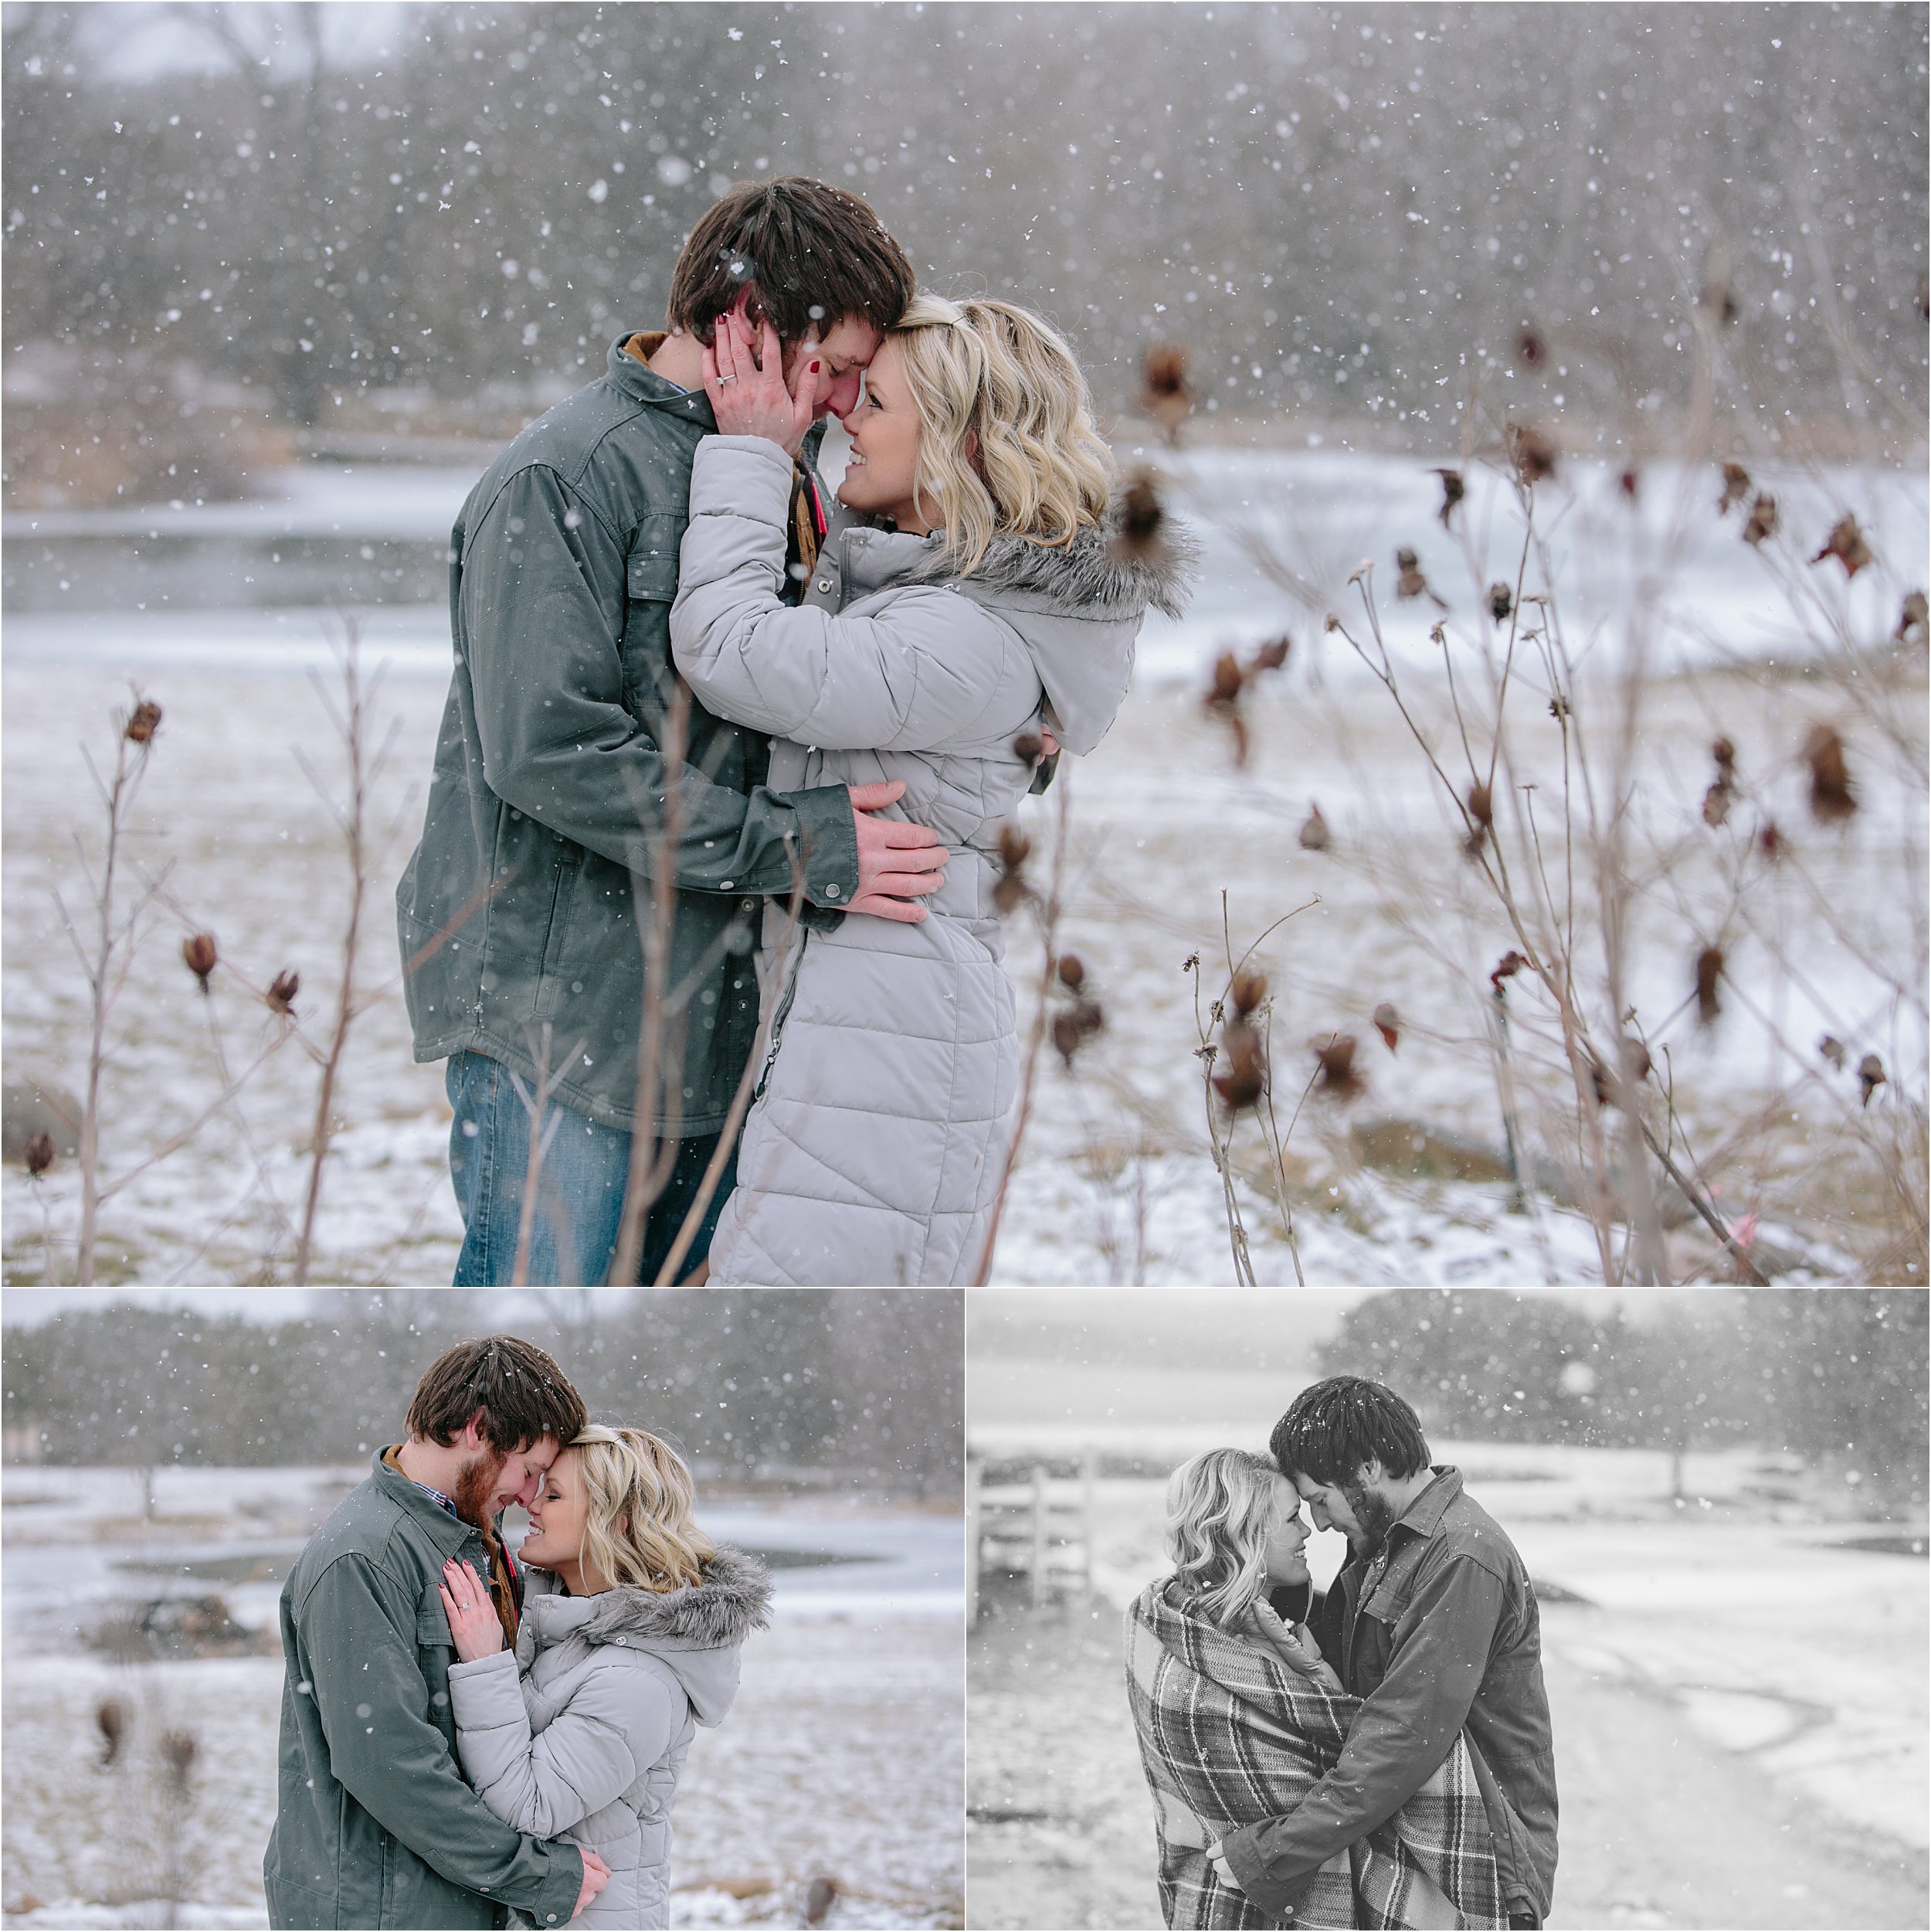 09-snowy-romantic-engagement-photos-on-private-farm.JPG